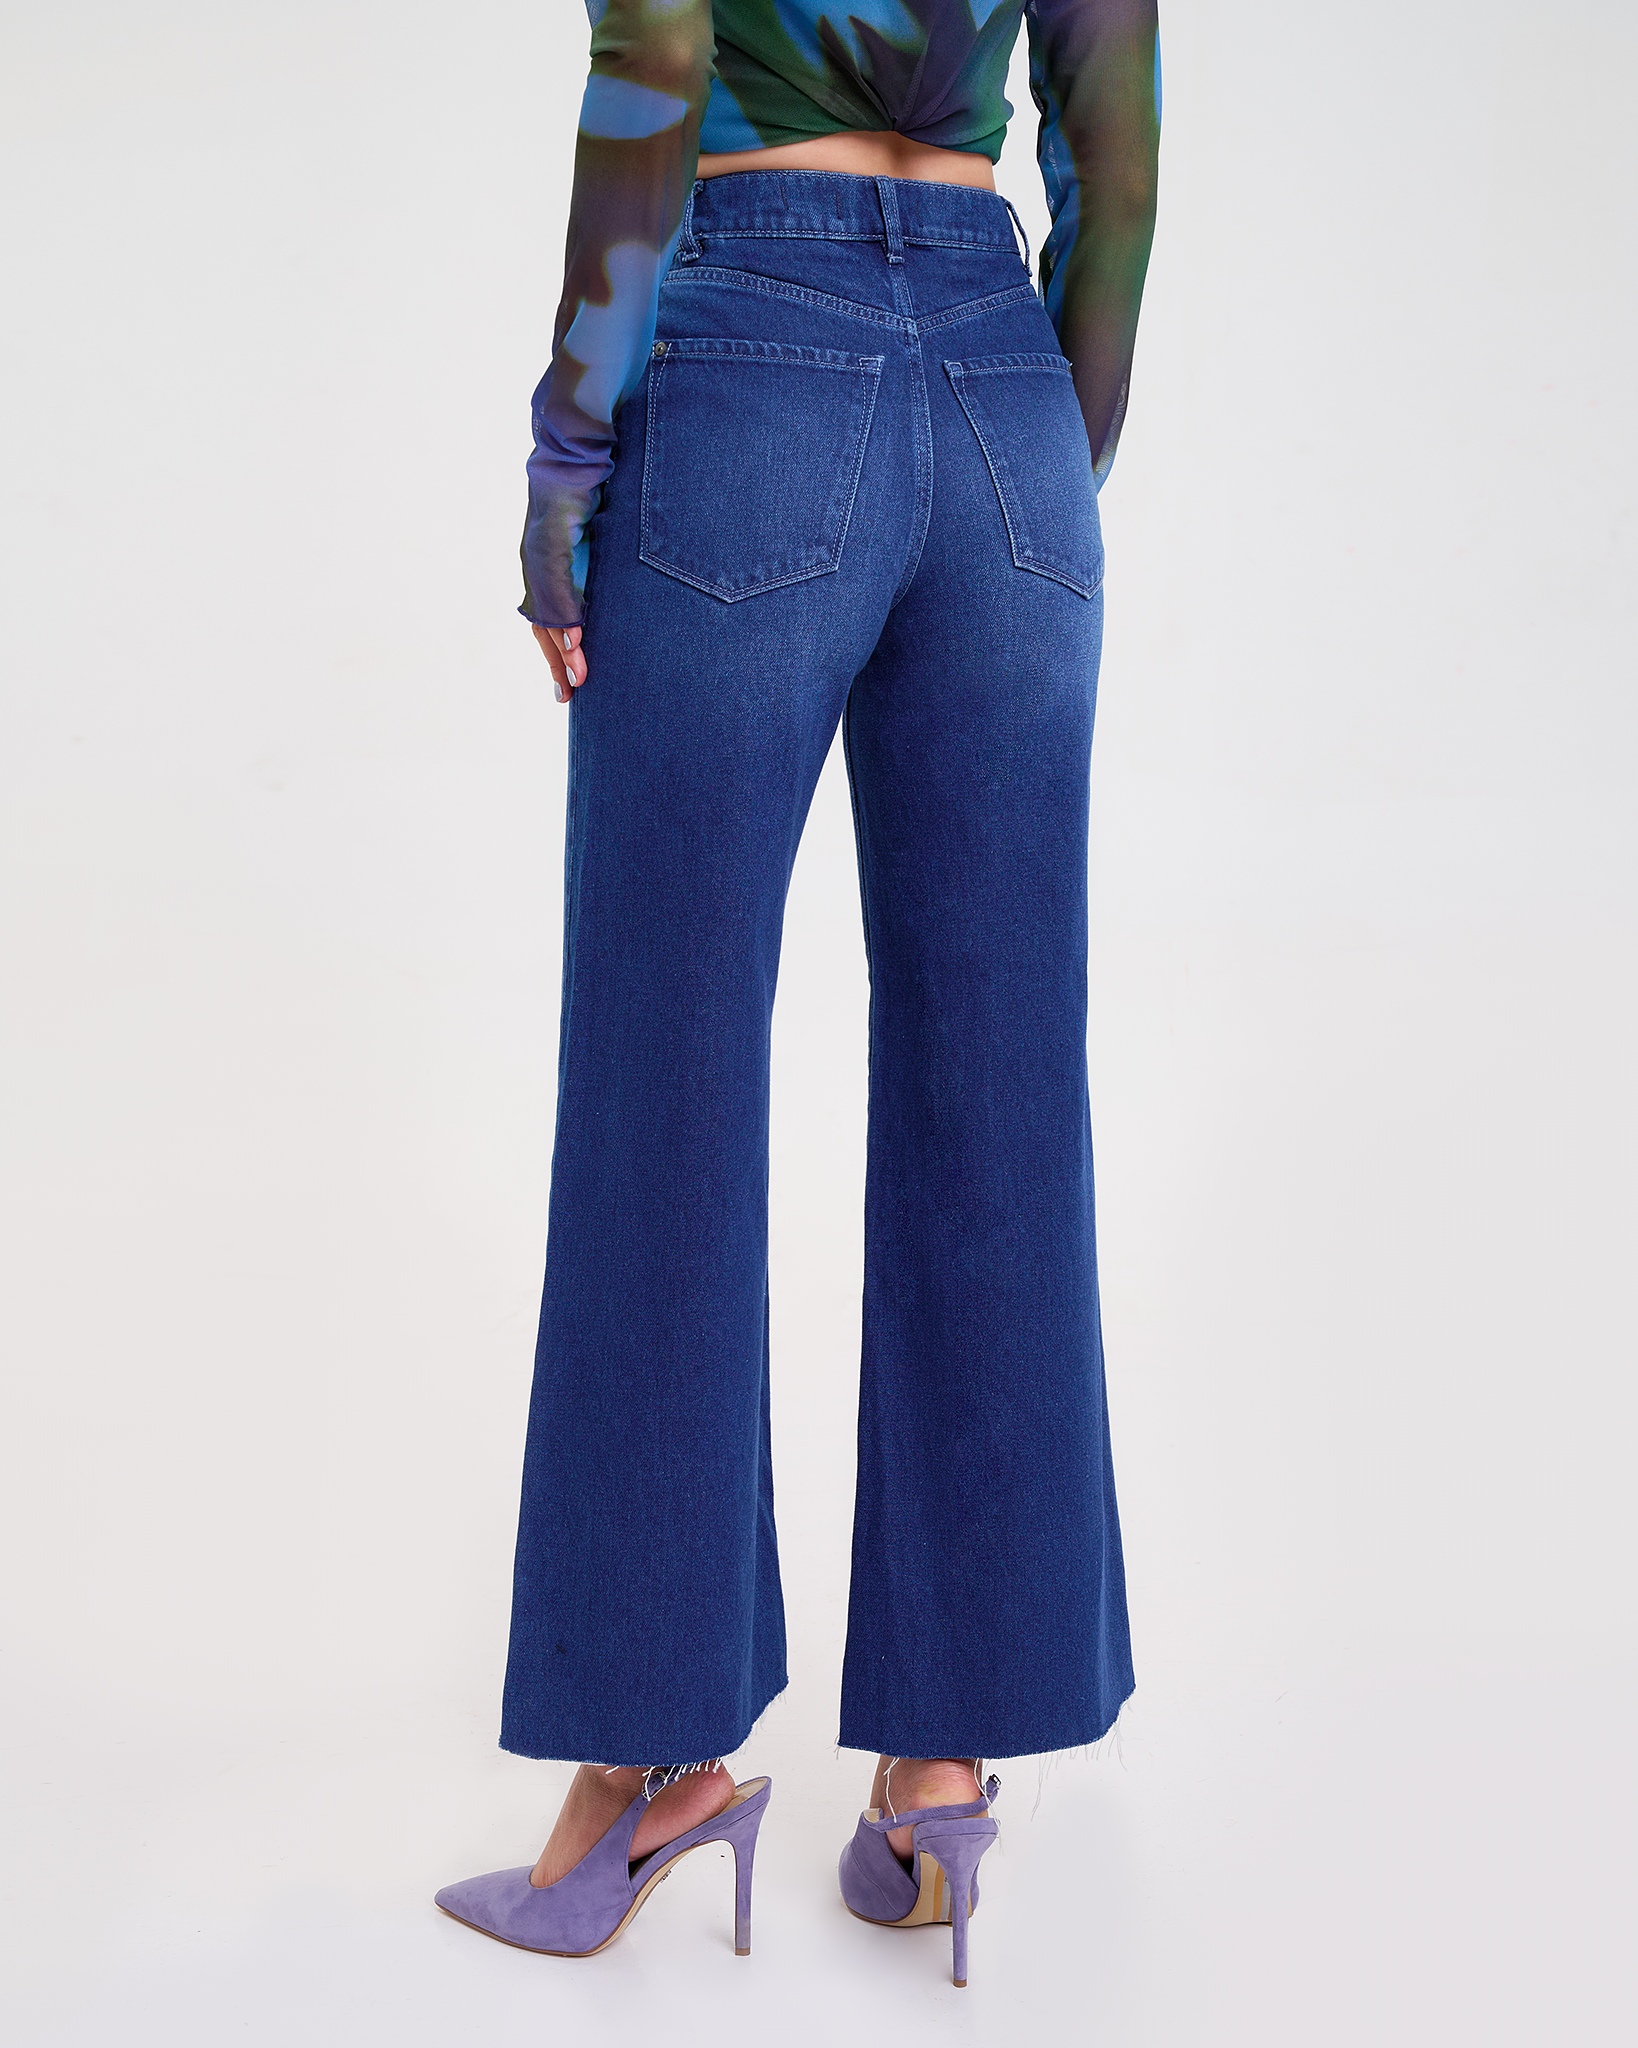 Quần Jeans Nữ Xanh Sapphire Dáng Loe Rộng. Sapphire Blue Super Flared Jeans - 221WD2084B3950